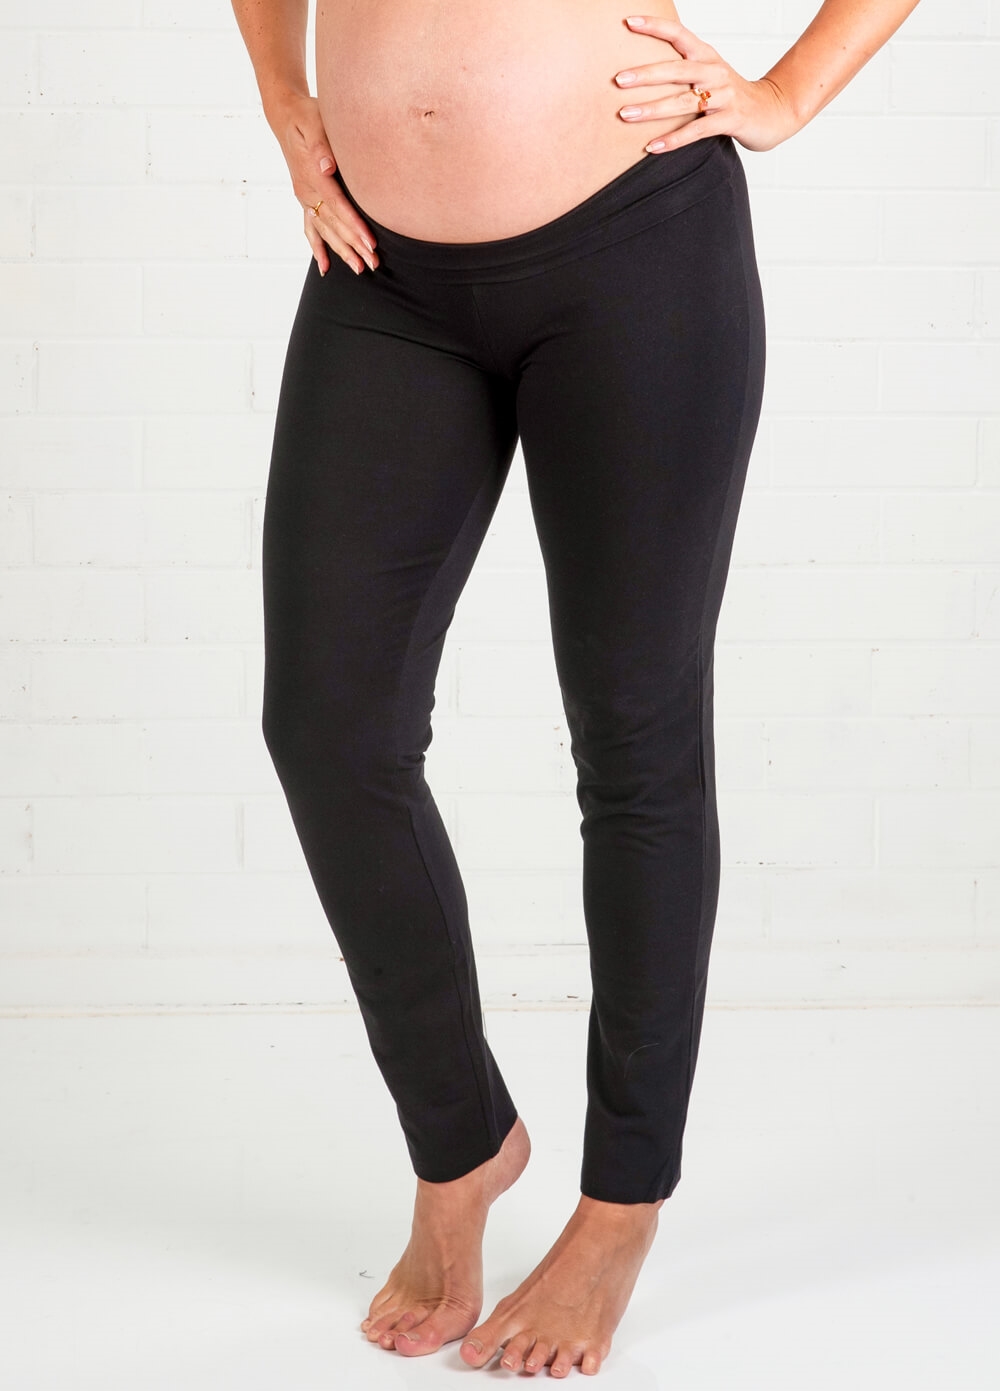 Jacoba Black Maternity Yoga Pants by Trimester Clothing